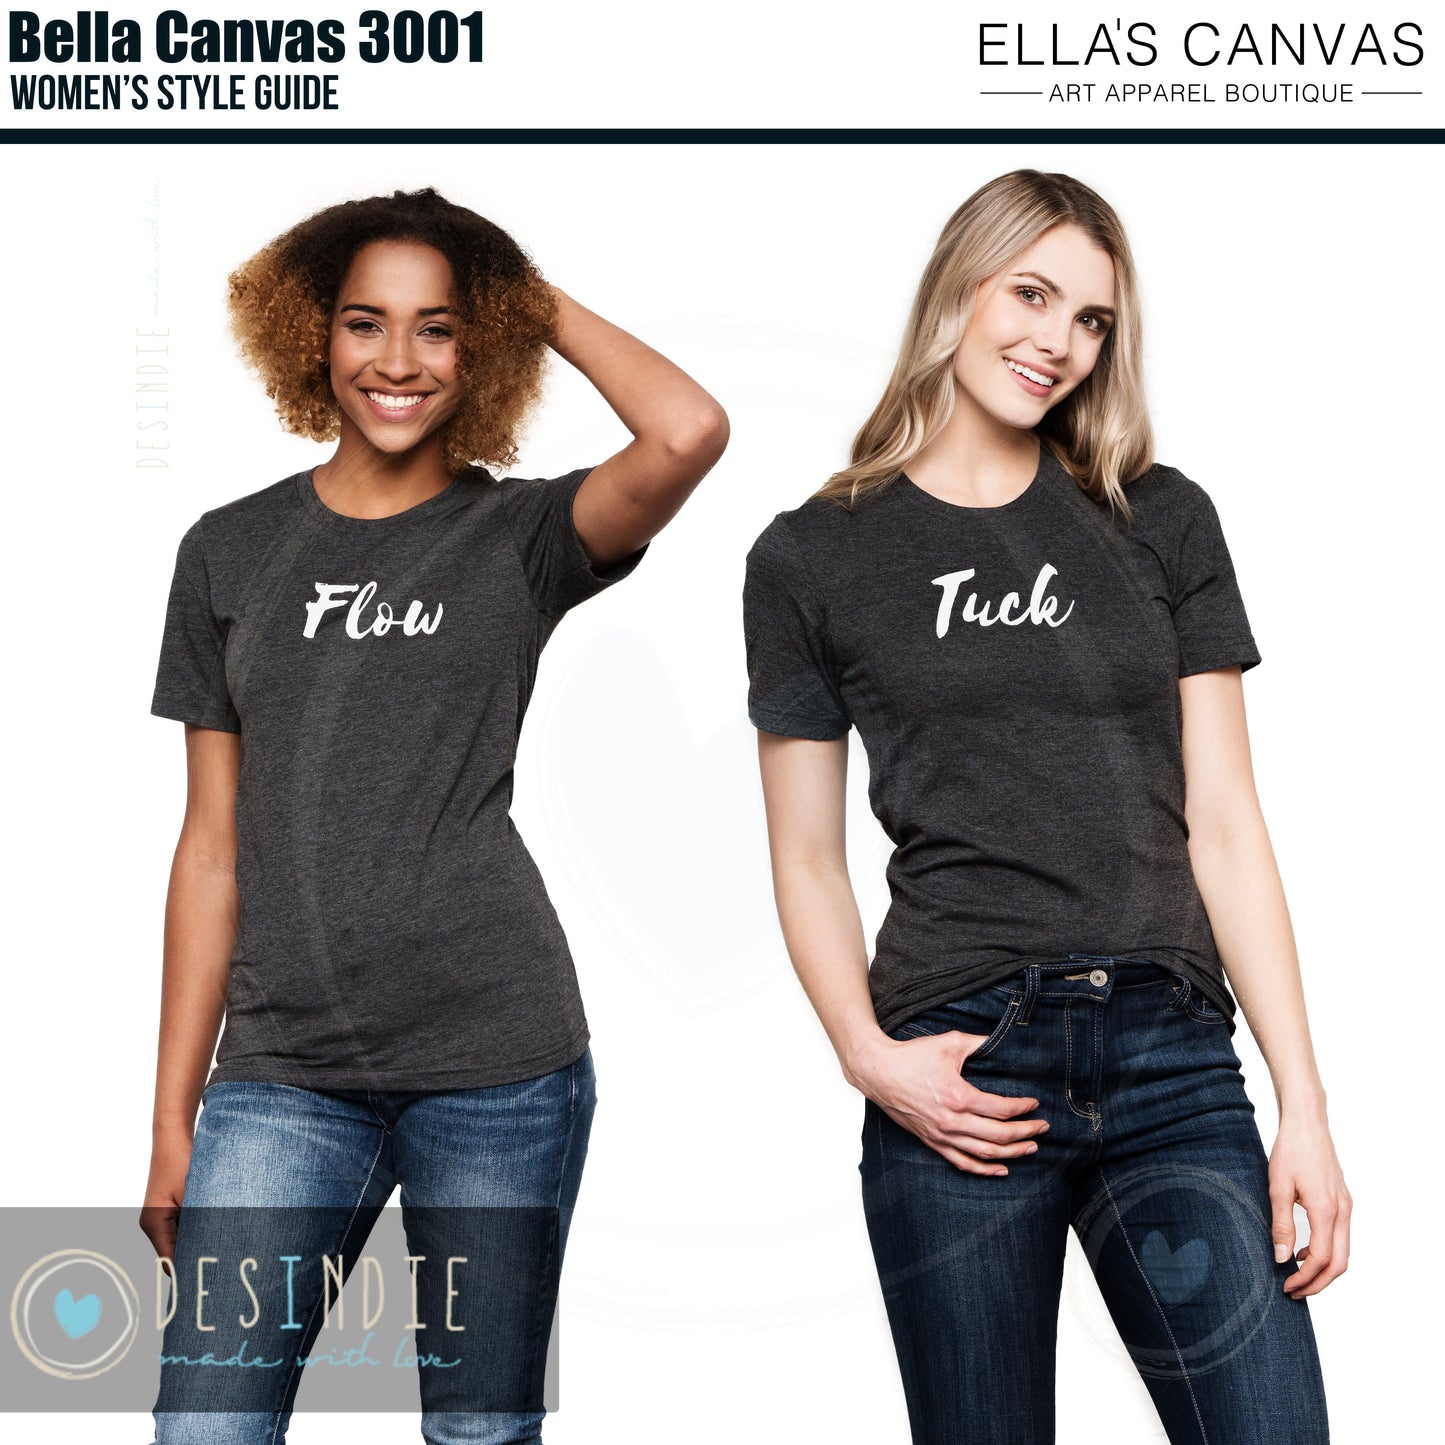 I Believe Retro Yeti Ultra Soft Graphic Tee Unisex Soft Tee T-shirt for Women or Men